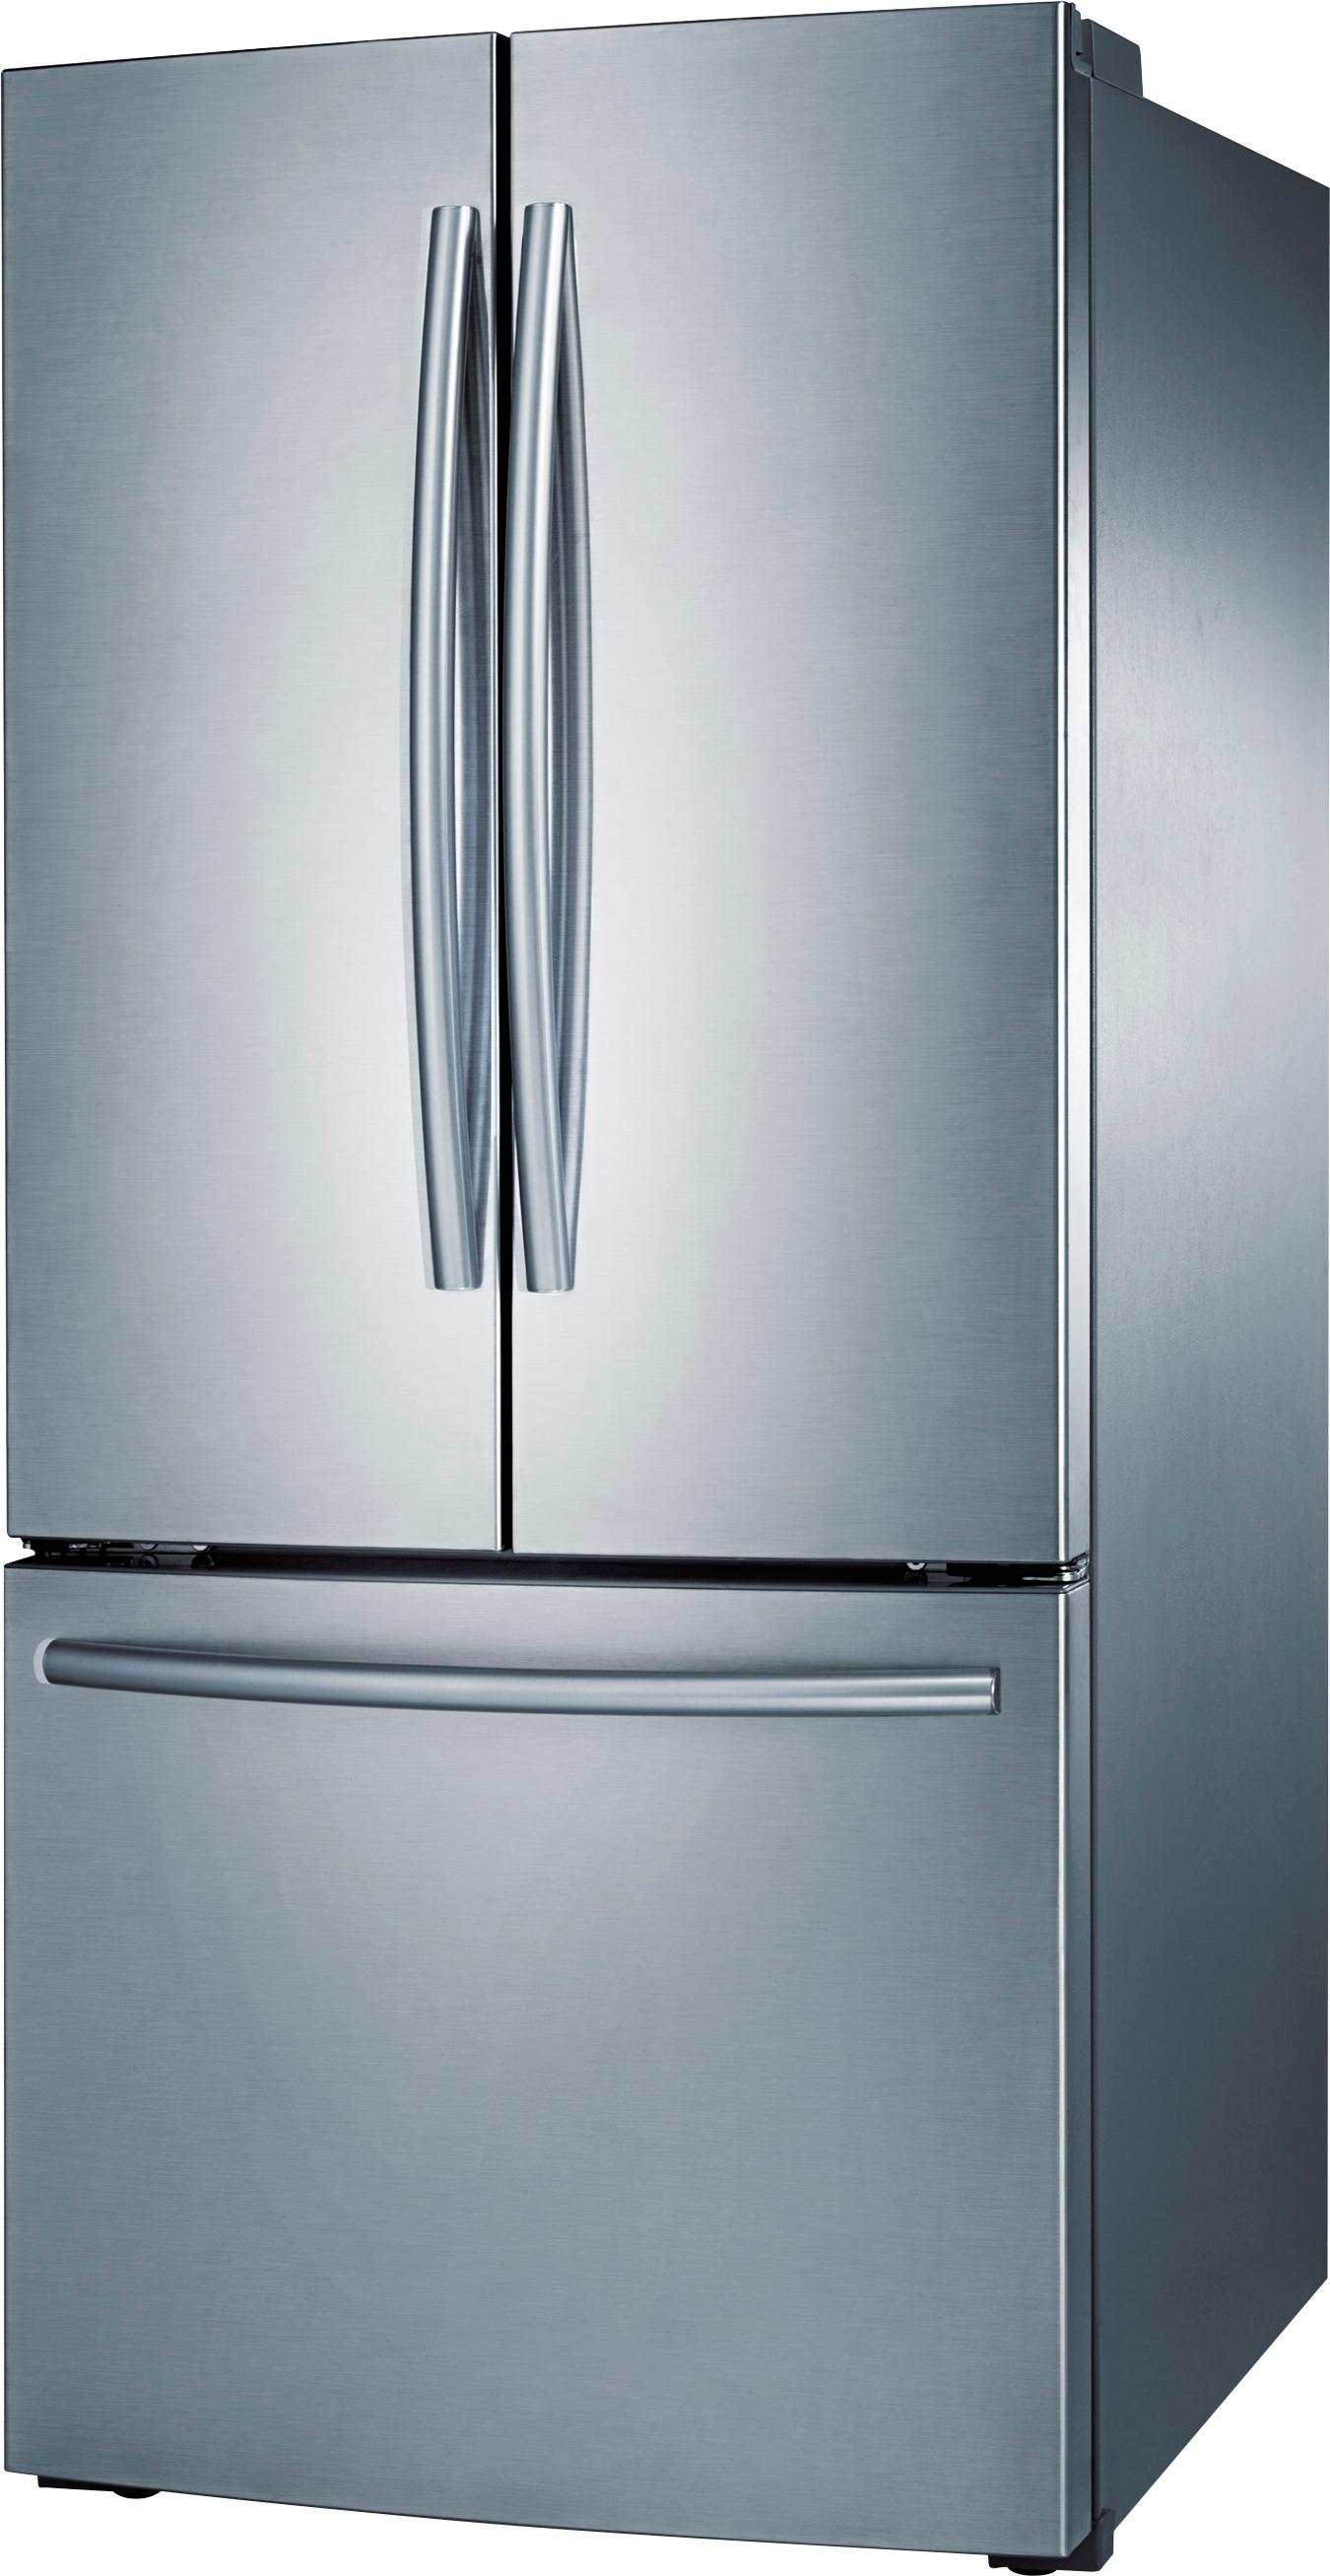 Left View: GE - 25.1 Cu. Ft. Side-By-Side Refrigerator with External Ice & Water Dispenser - Fingerprint resistant black slate